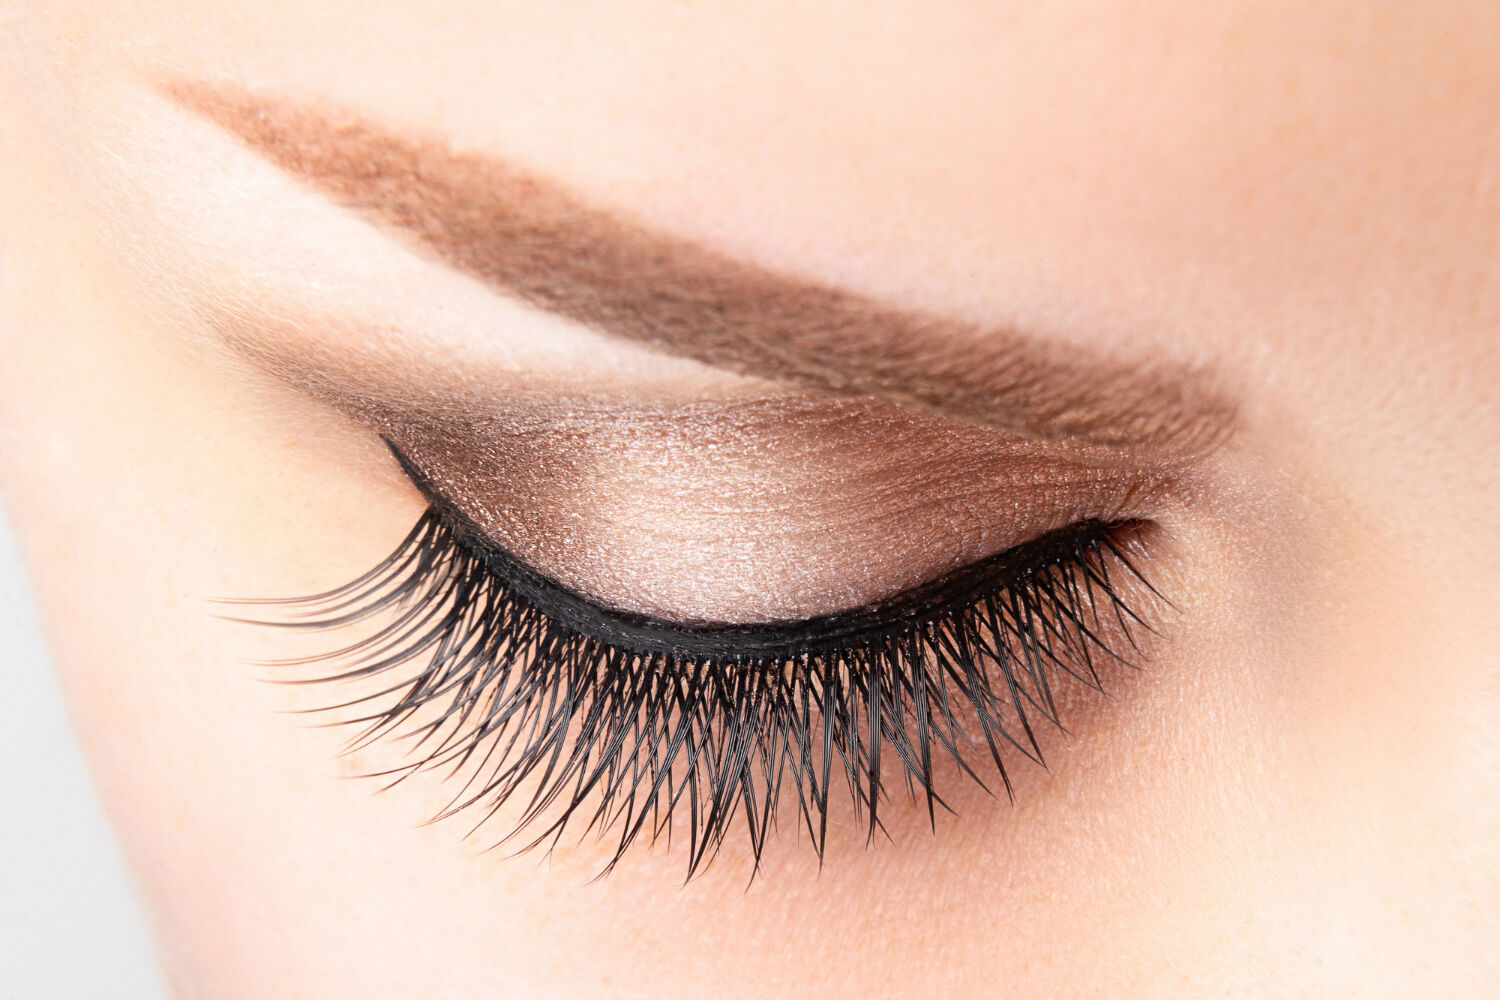 female-eye-with-long-false-eyelashes-beautiful-makeup-light-brown-eyebrow-close-up